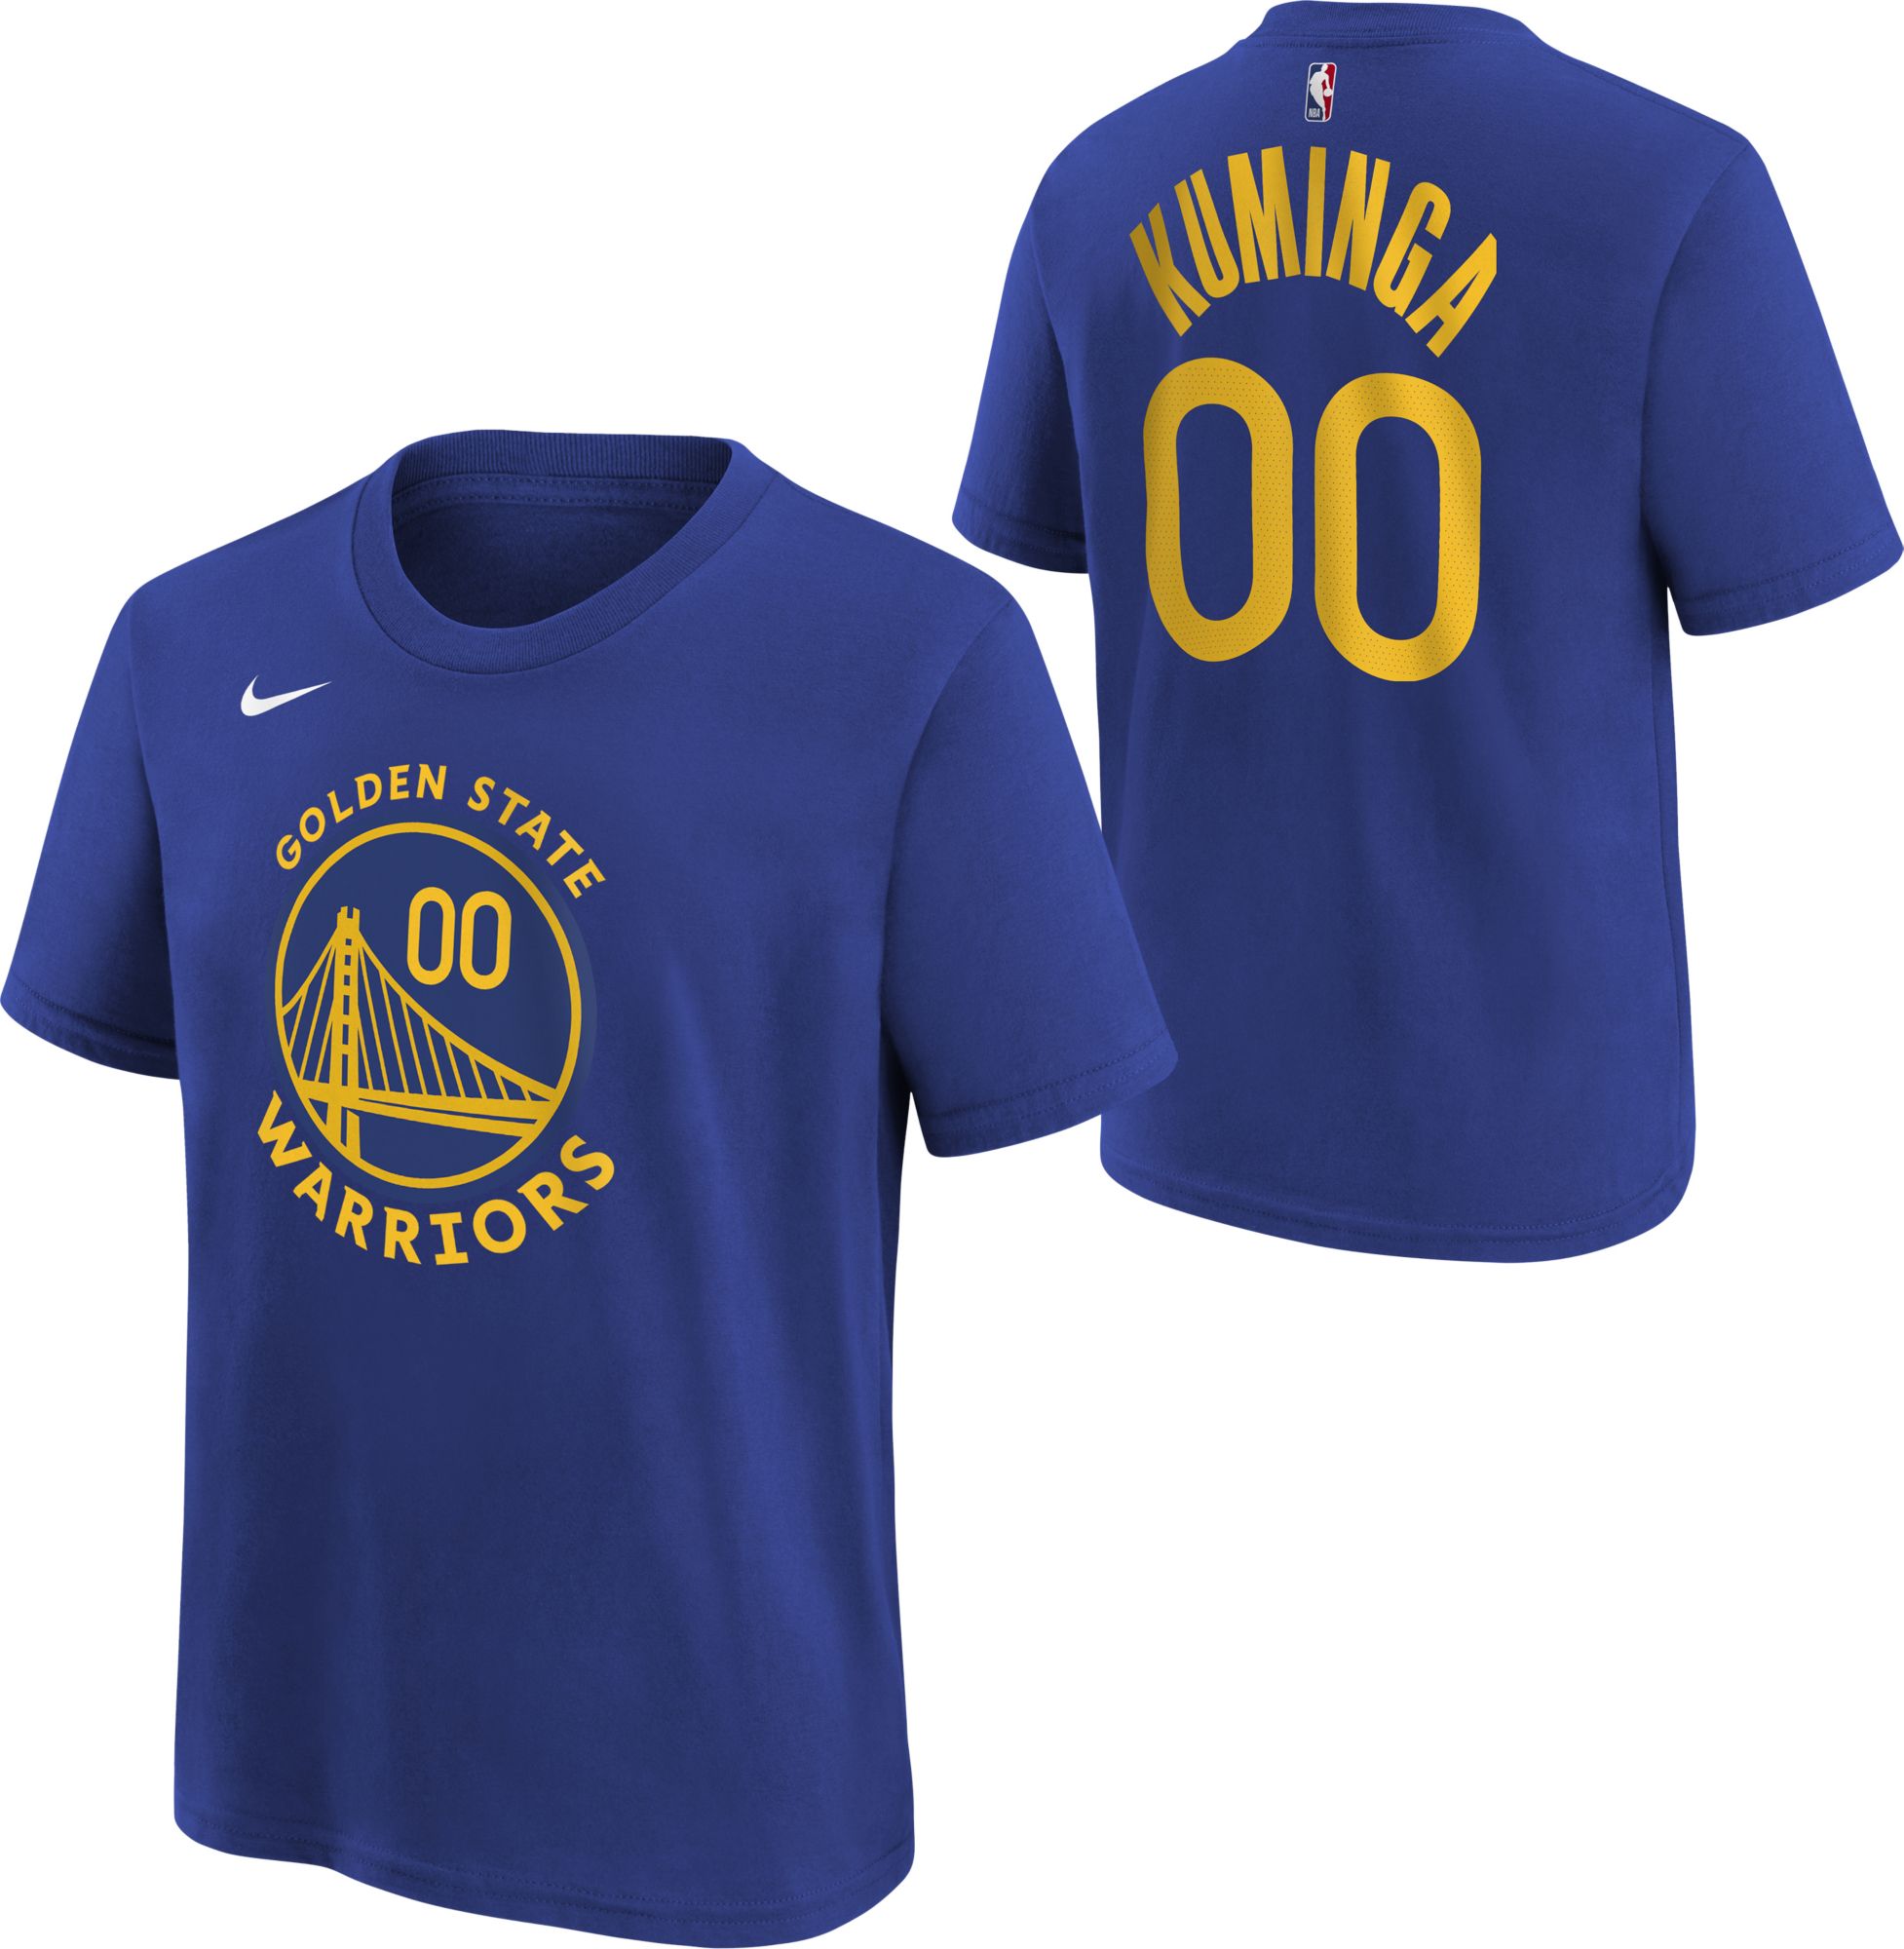 Nike / Men's Golden State Warriors Jonathan Kuminga #0 Blue T-Shirt